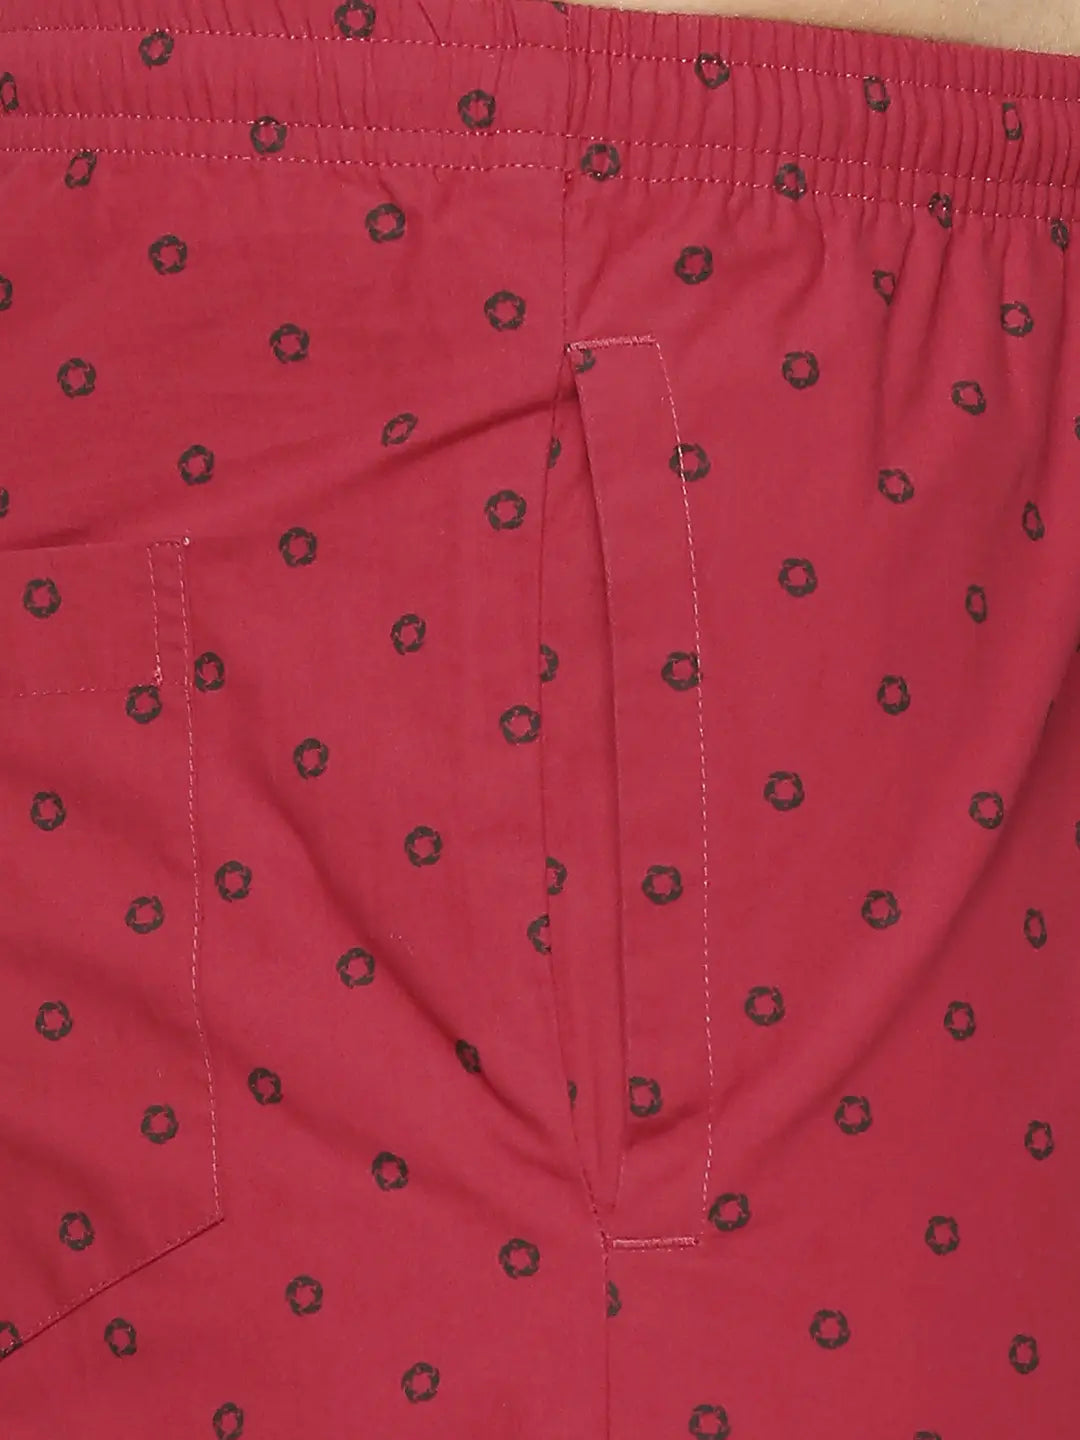 Men Premium Cotton Printed Maroon Pyjama- Underjeans by Spykar